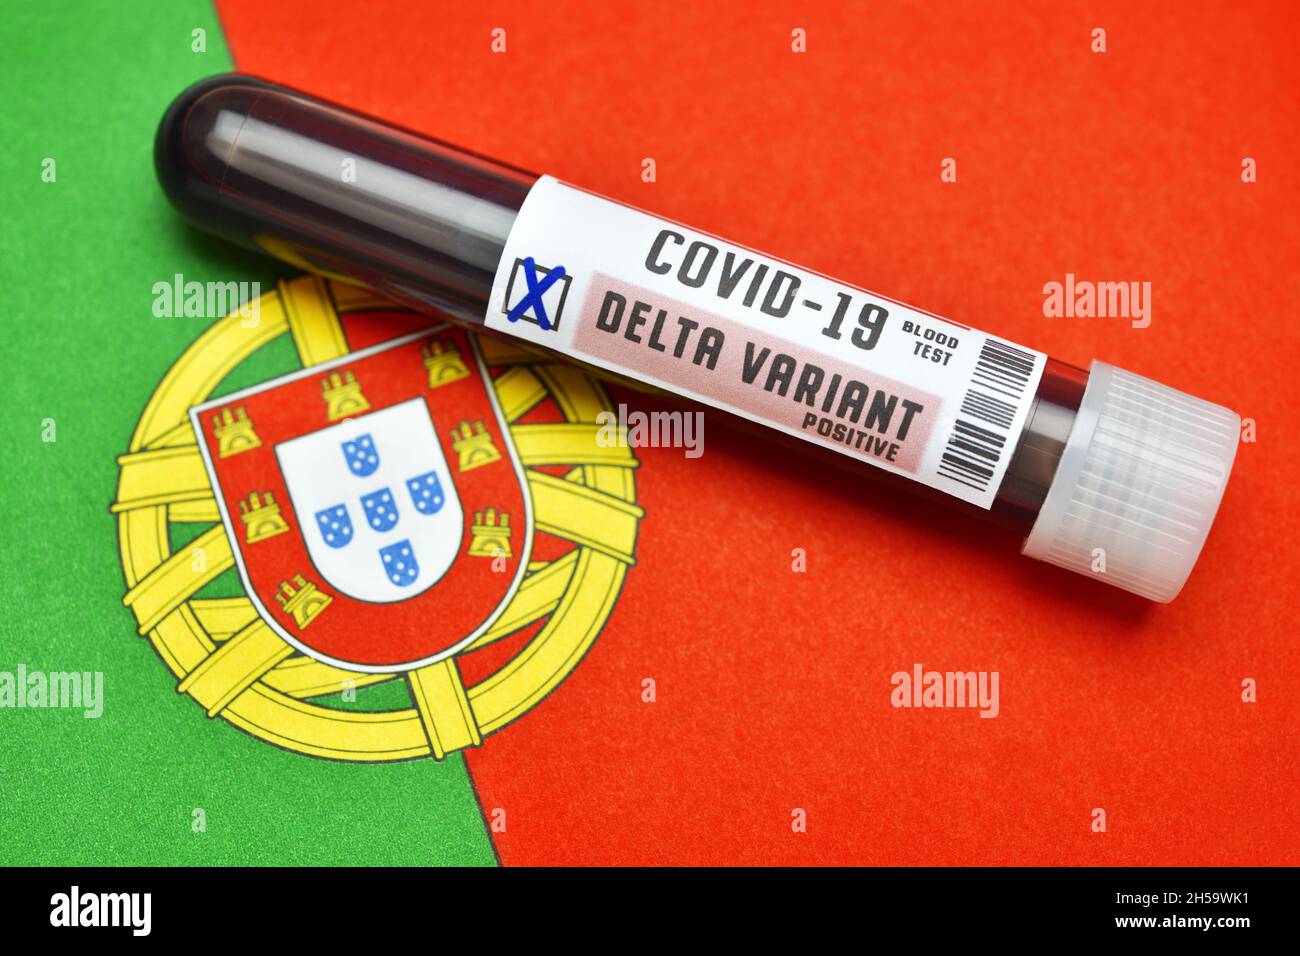 Blutprobe mit Coronavirus Delta-Variante B.1.617.2 auf Fahne von Portugal Foto de stock